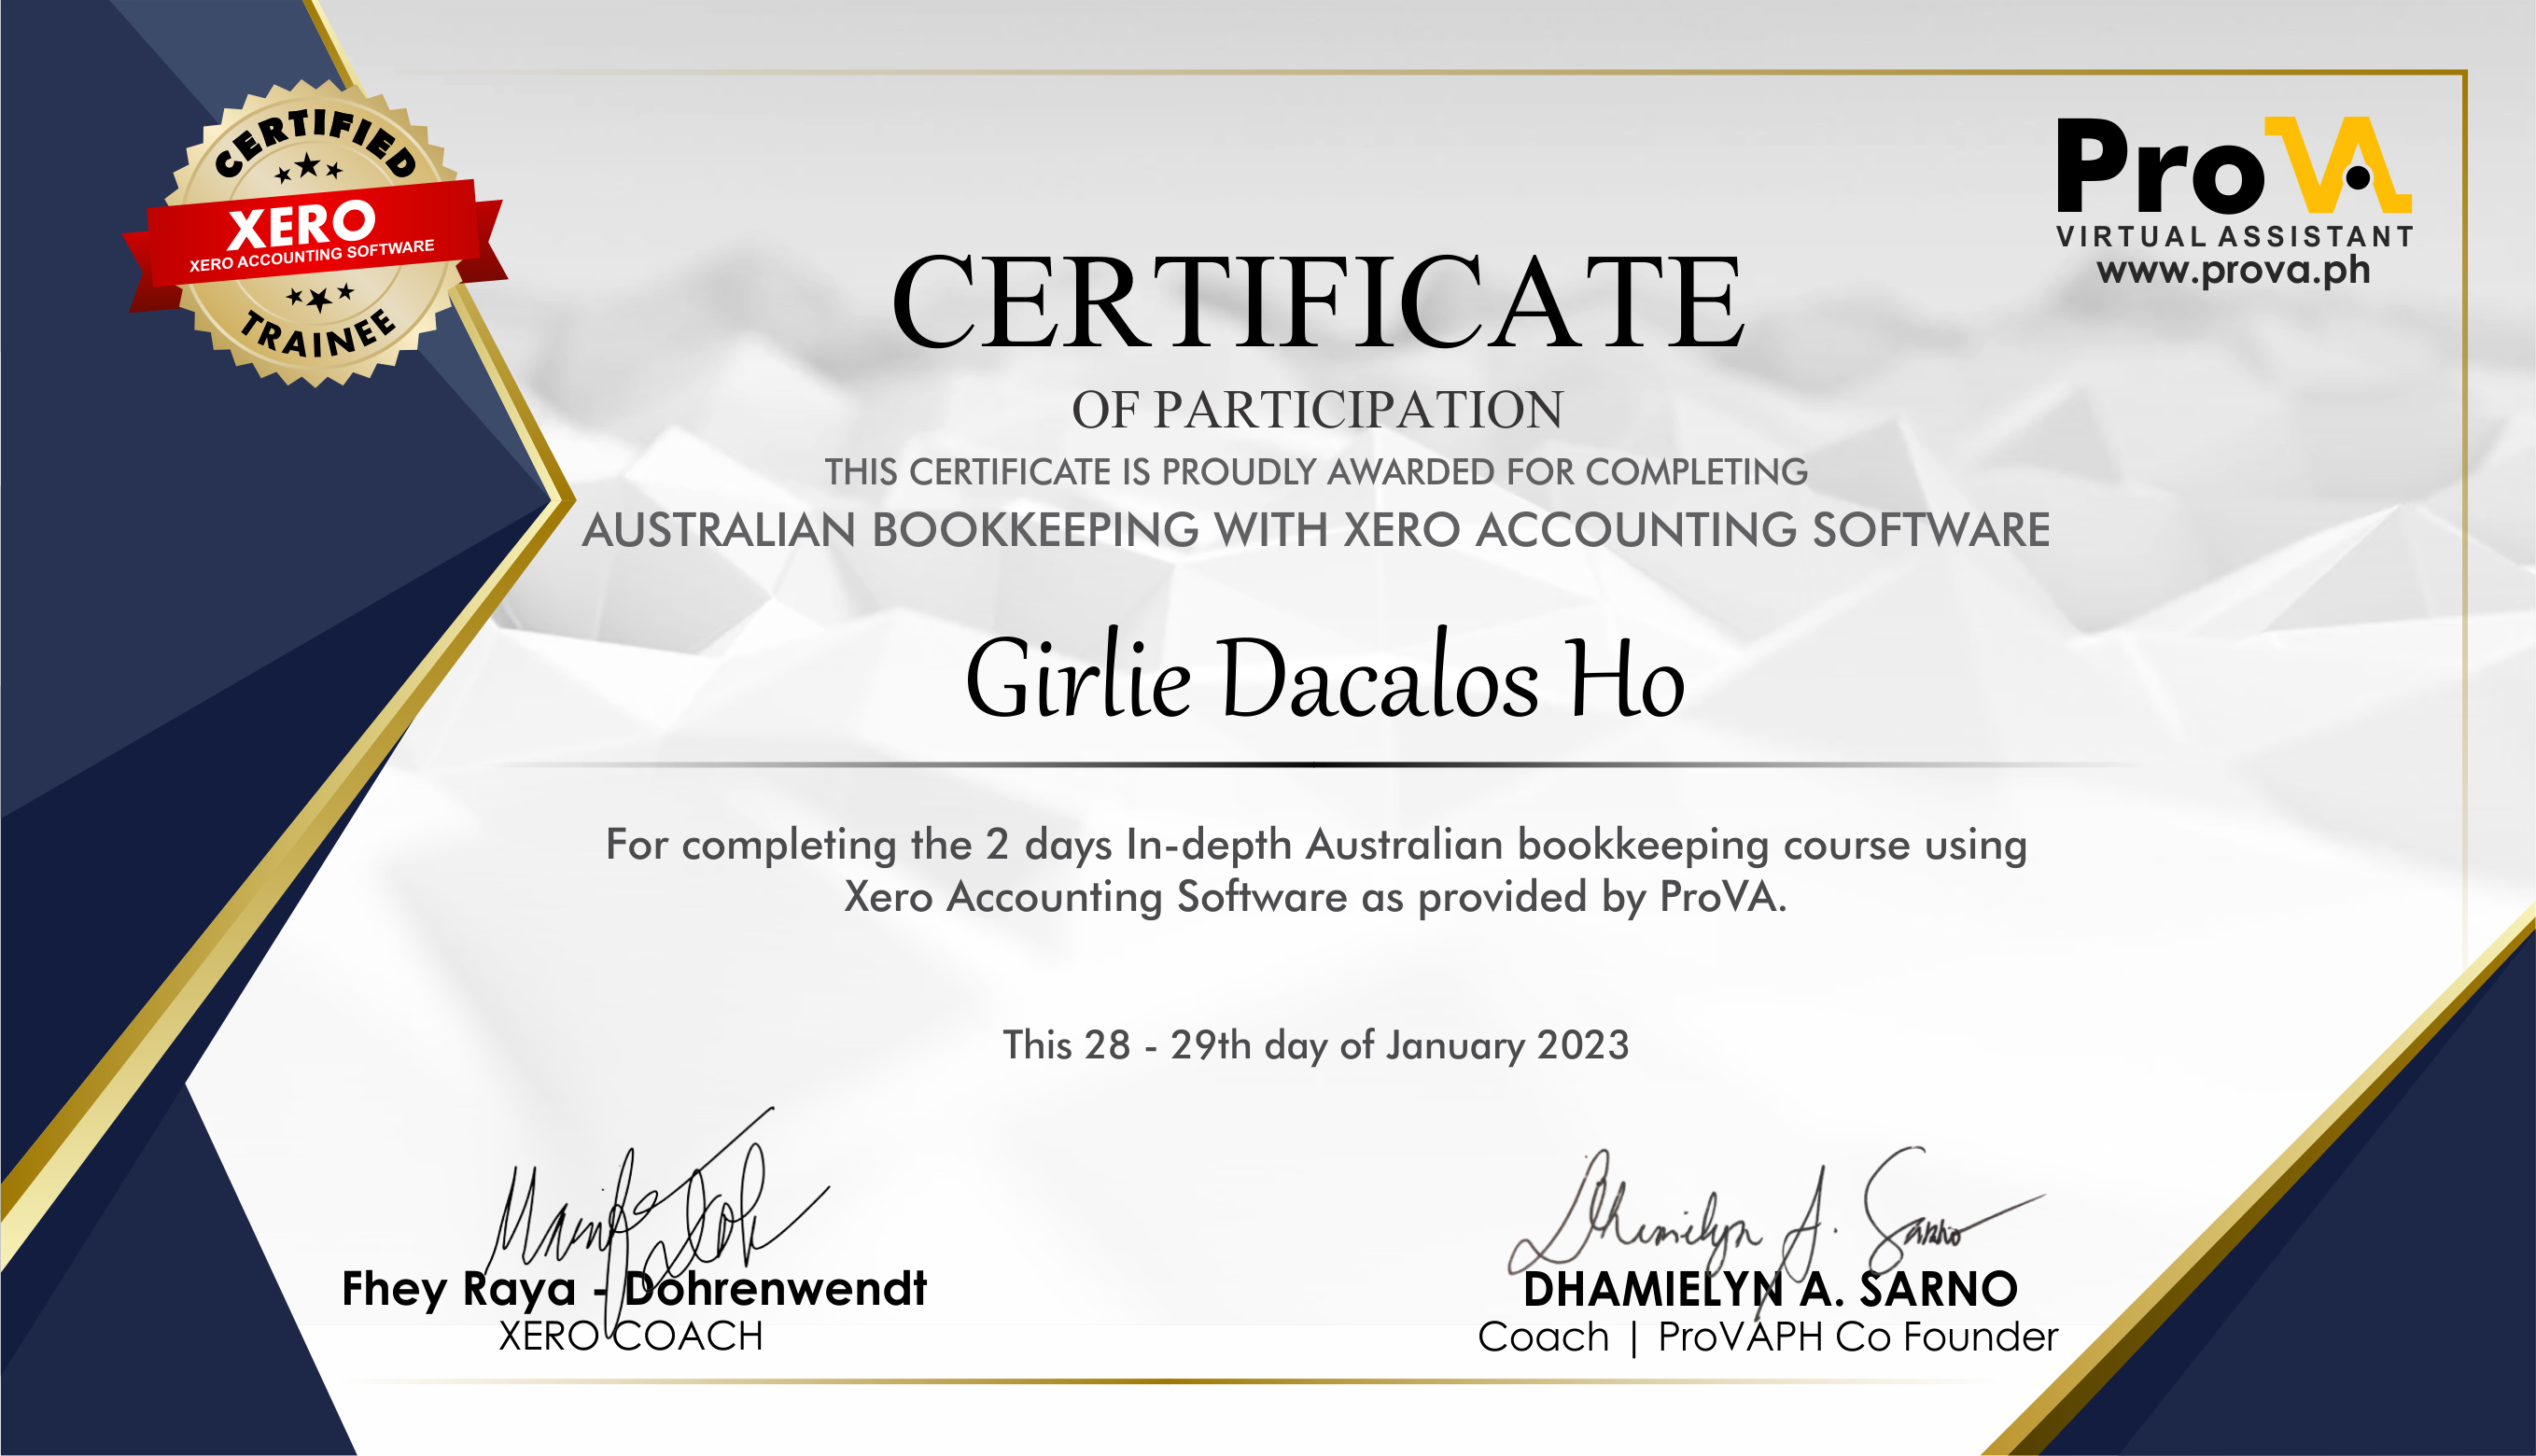 Xero Accounting Software Training Certificate